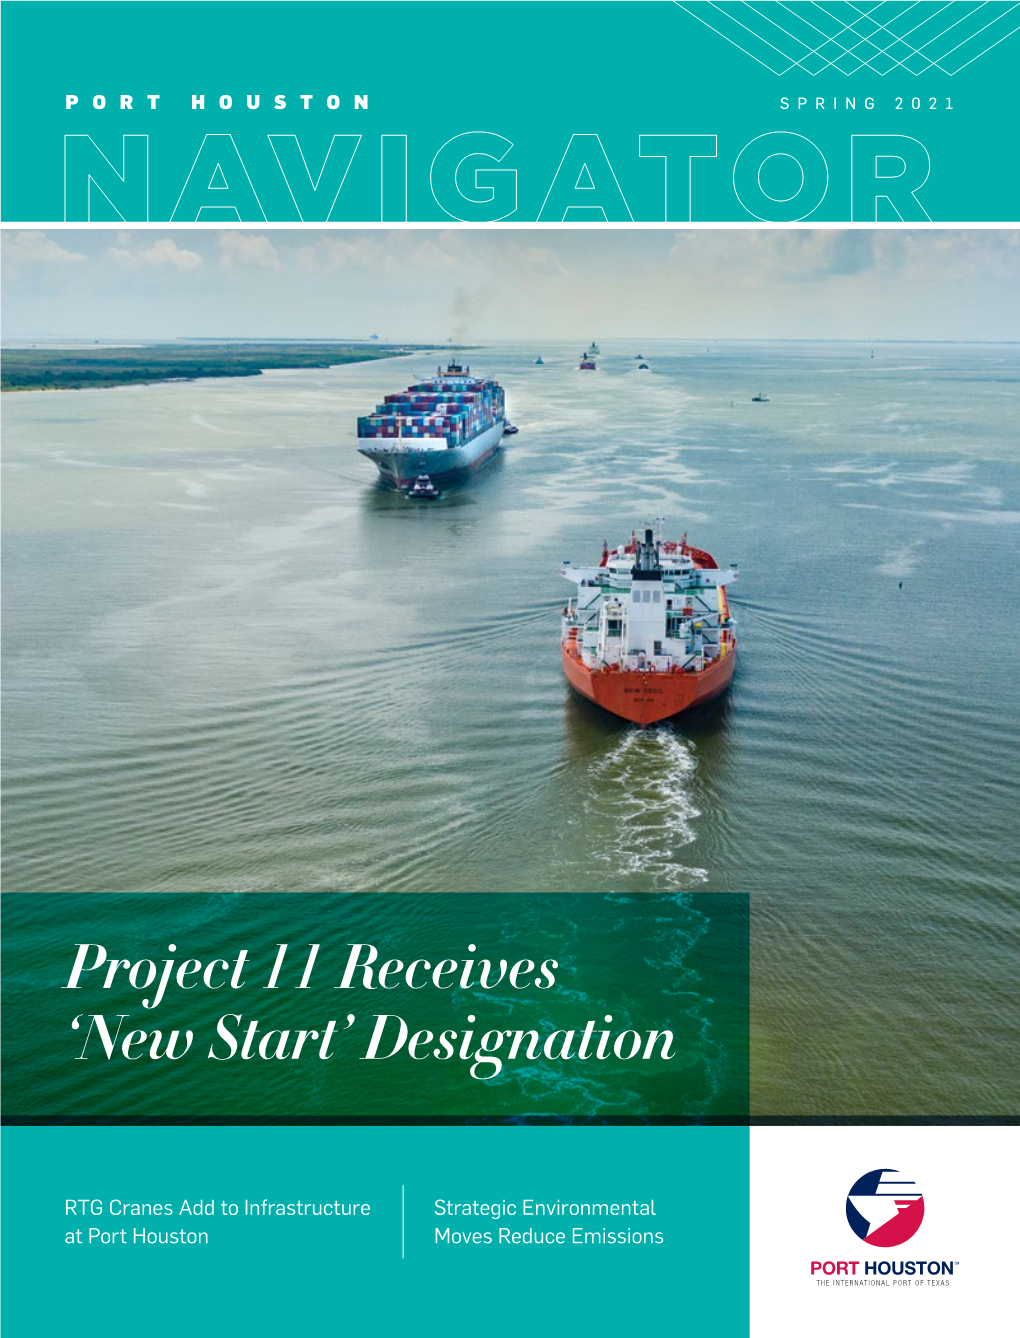 Project 11 Receives 'New Start' Designation